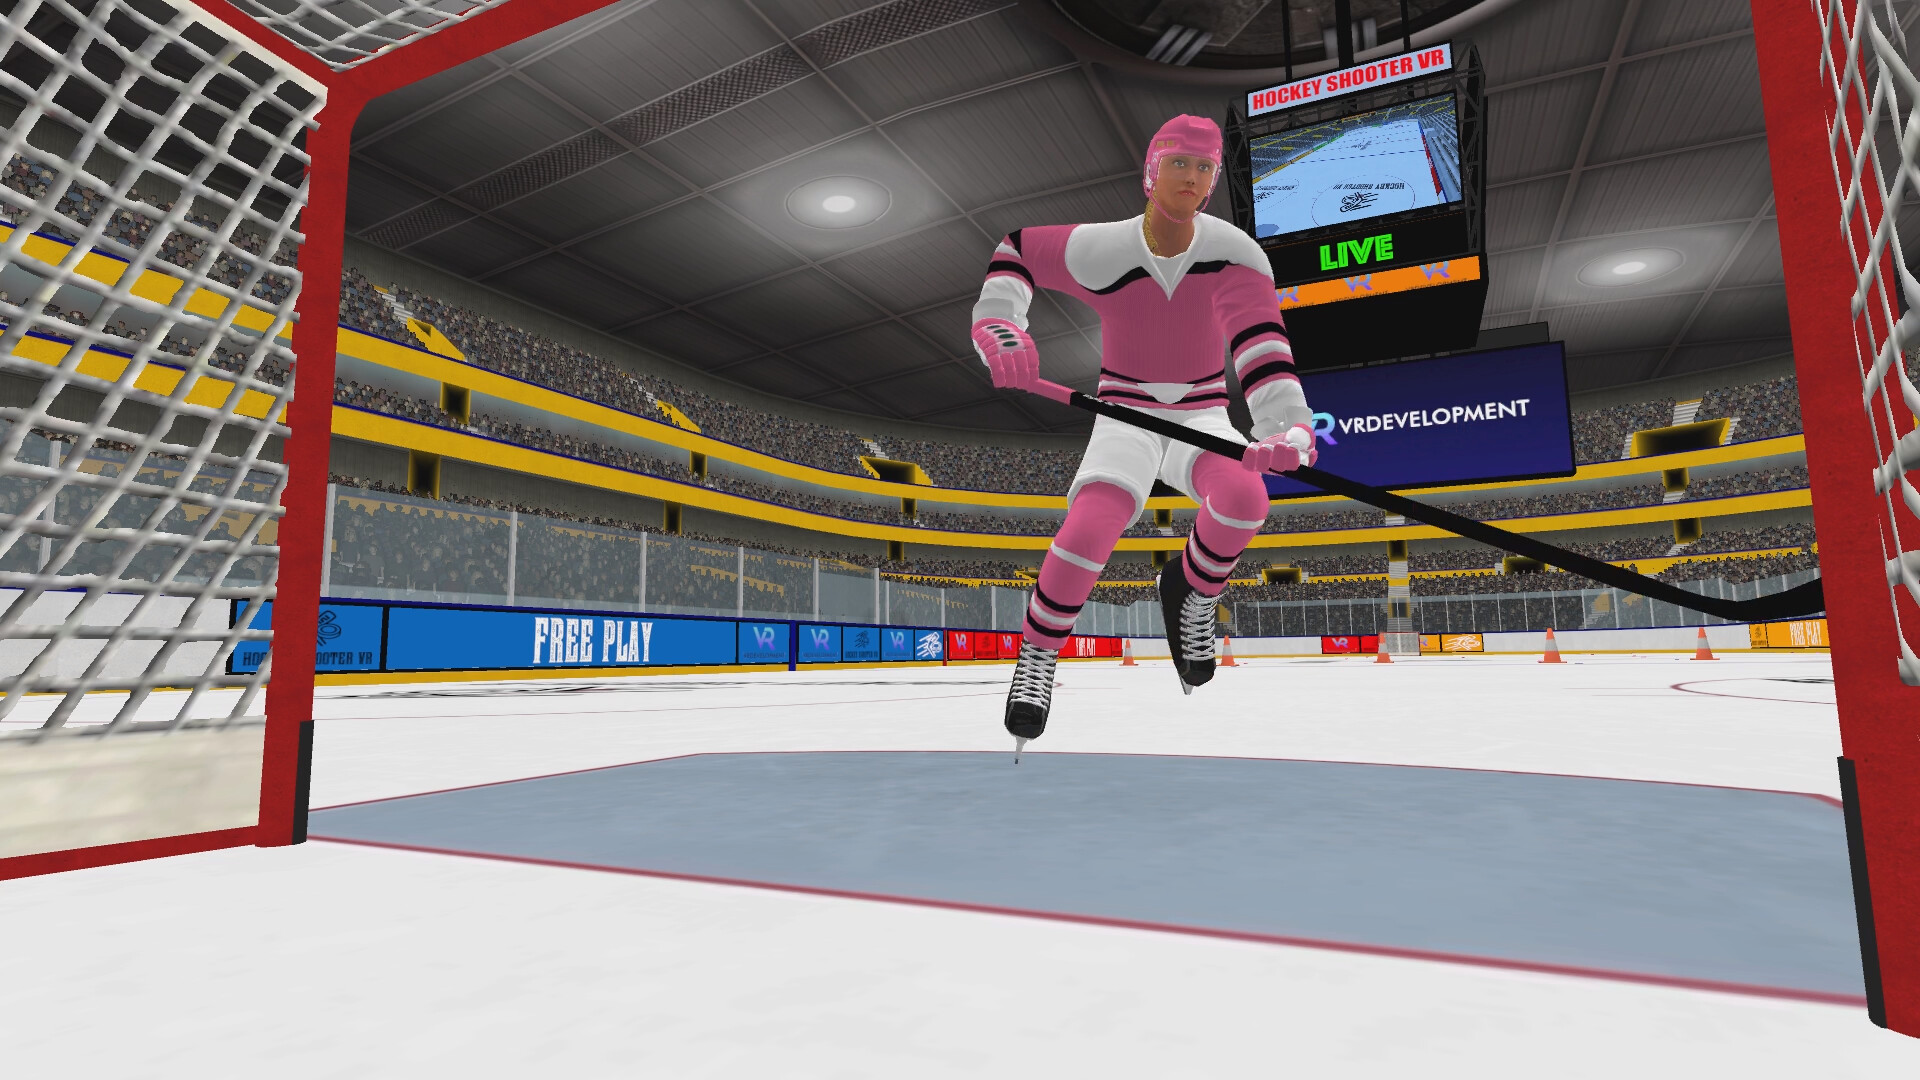 Hockey Shooter VR on Steam